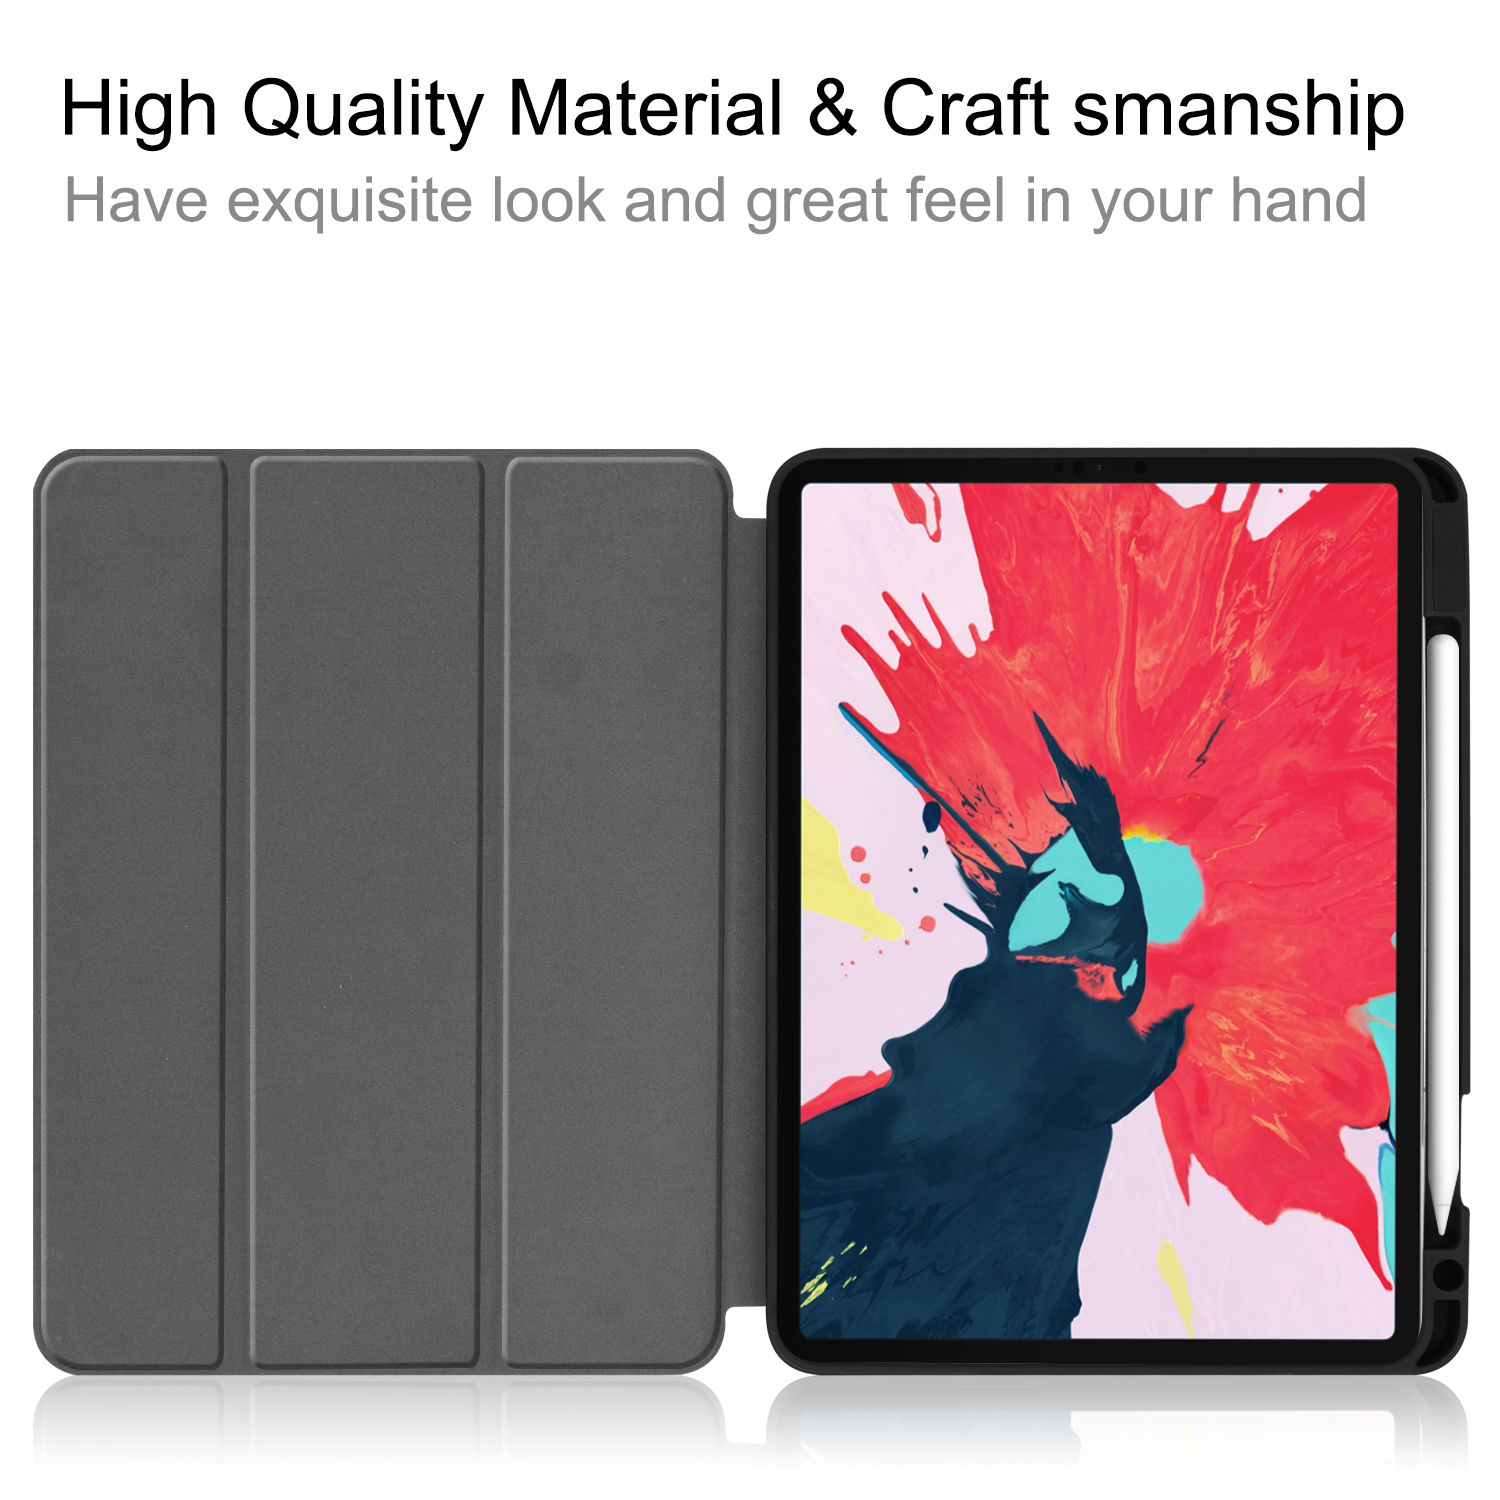 iPad Hülle Bookcover Schutzhülle Pro Apple Zoll 2020 Kunstleder, für LOBWERK Blau 11